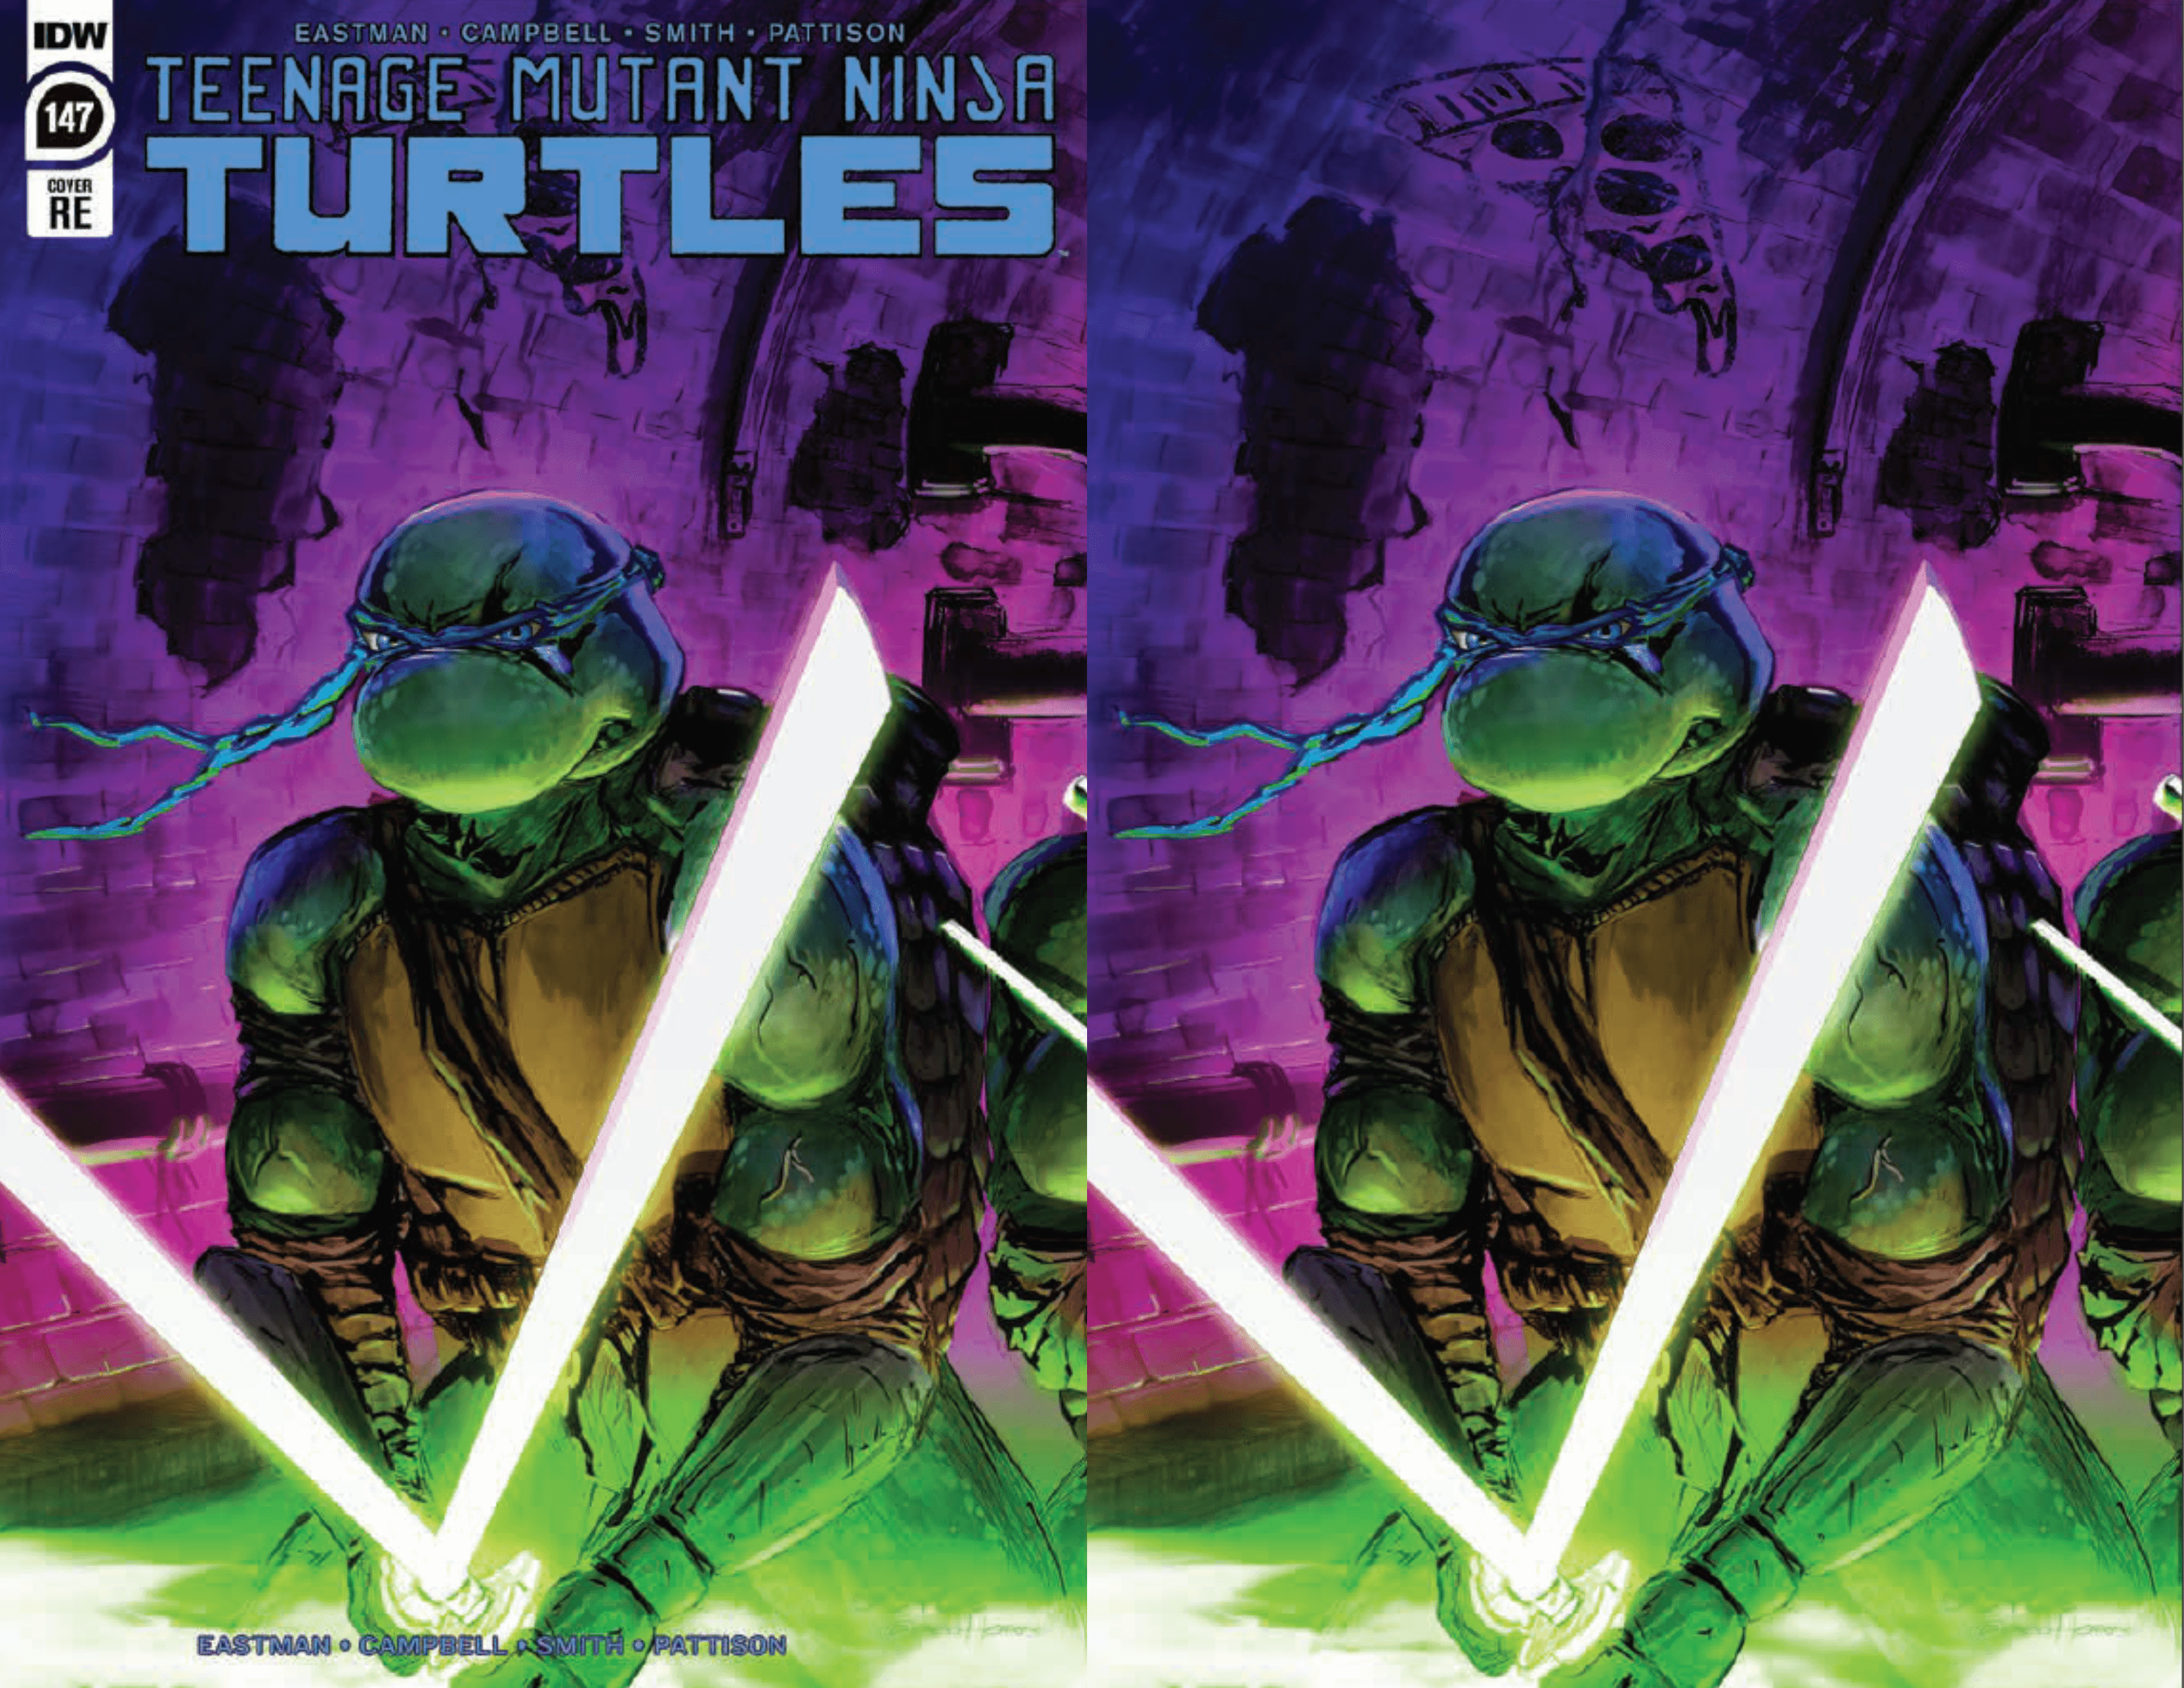 Teenage Mutant Ninja Turtles #147 - Lightning Comix Exclusive - Trade Dress and Virgin Bundle - LIGHTNING COMIX